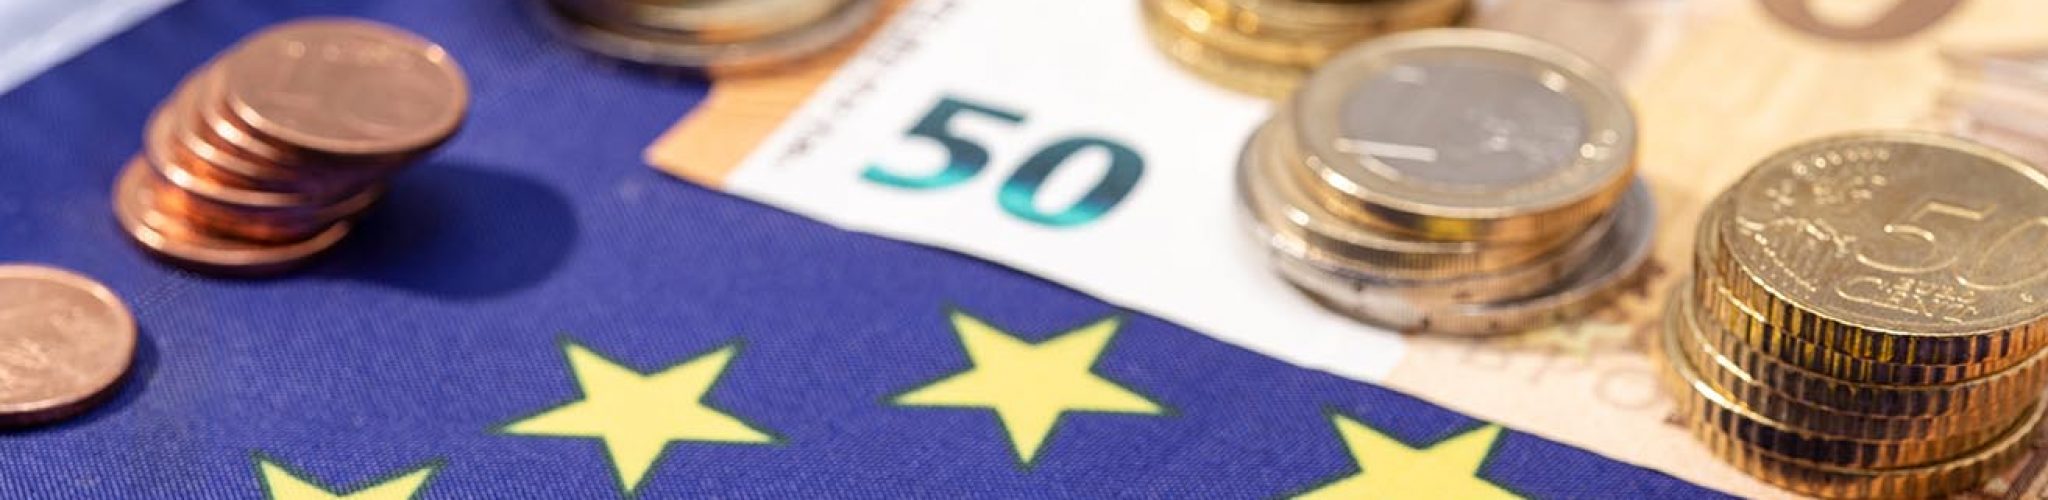 European Union financial stimulus on coronavirus Covid-19 pandemic concept. European Union flag with euro bills and coins